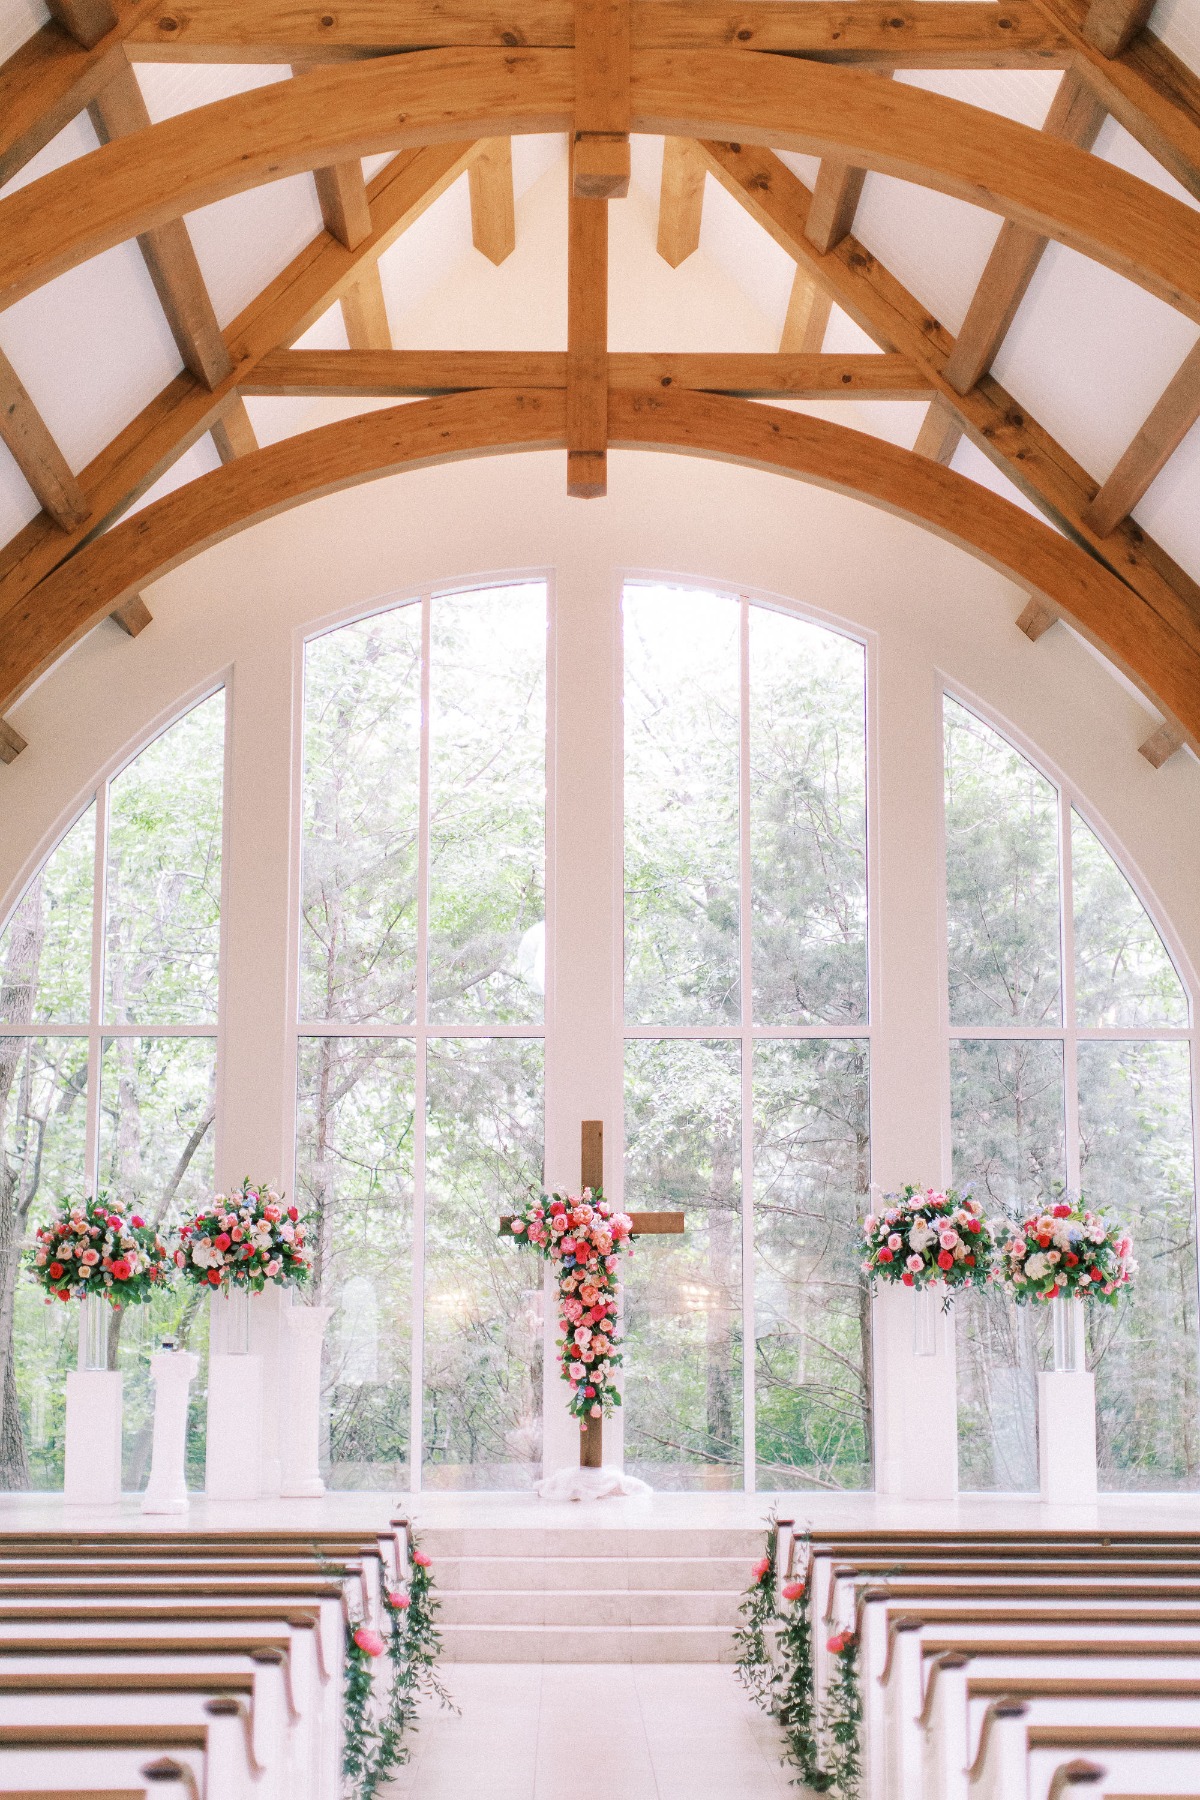 A Stunning Church Wedding Like You've Never Seen Before